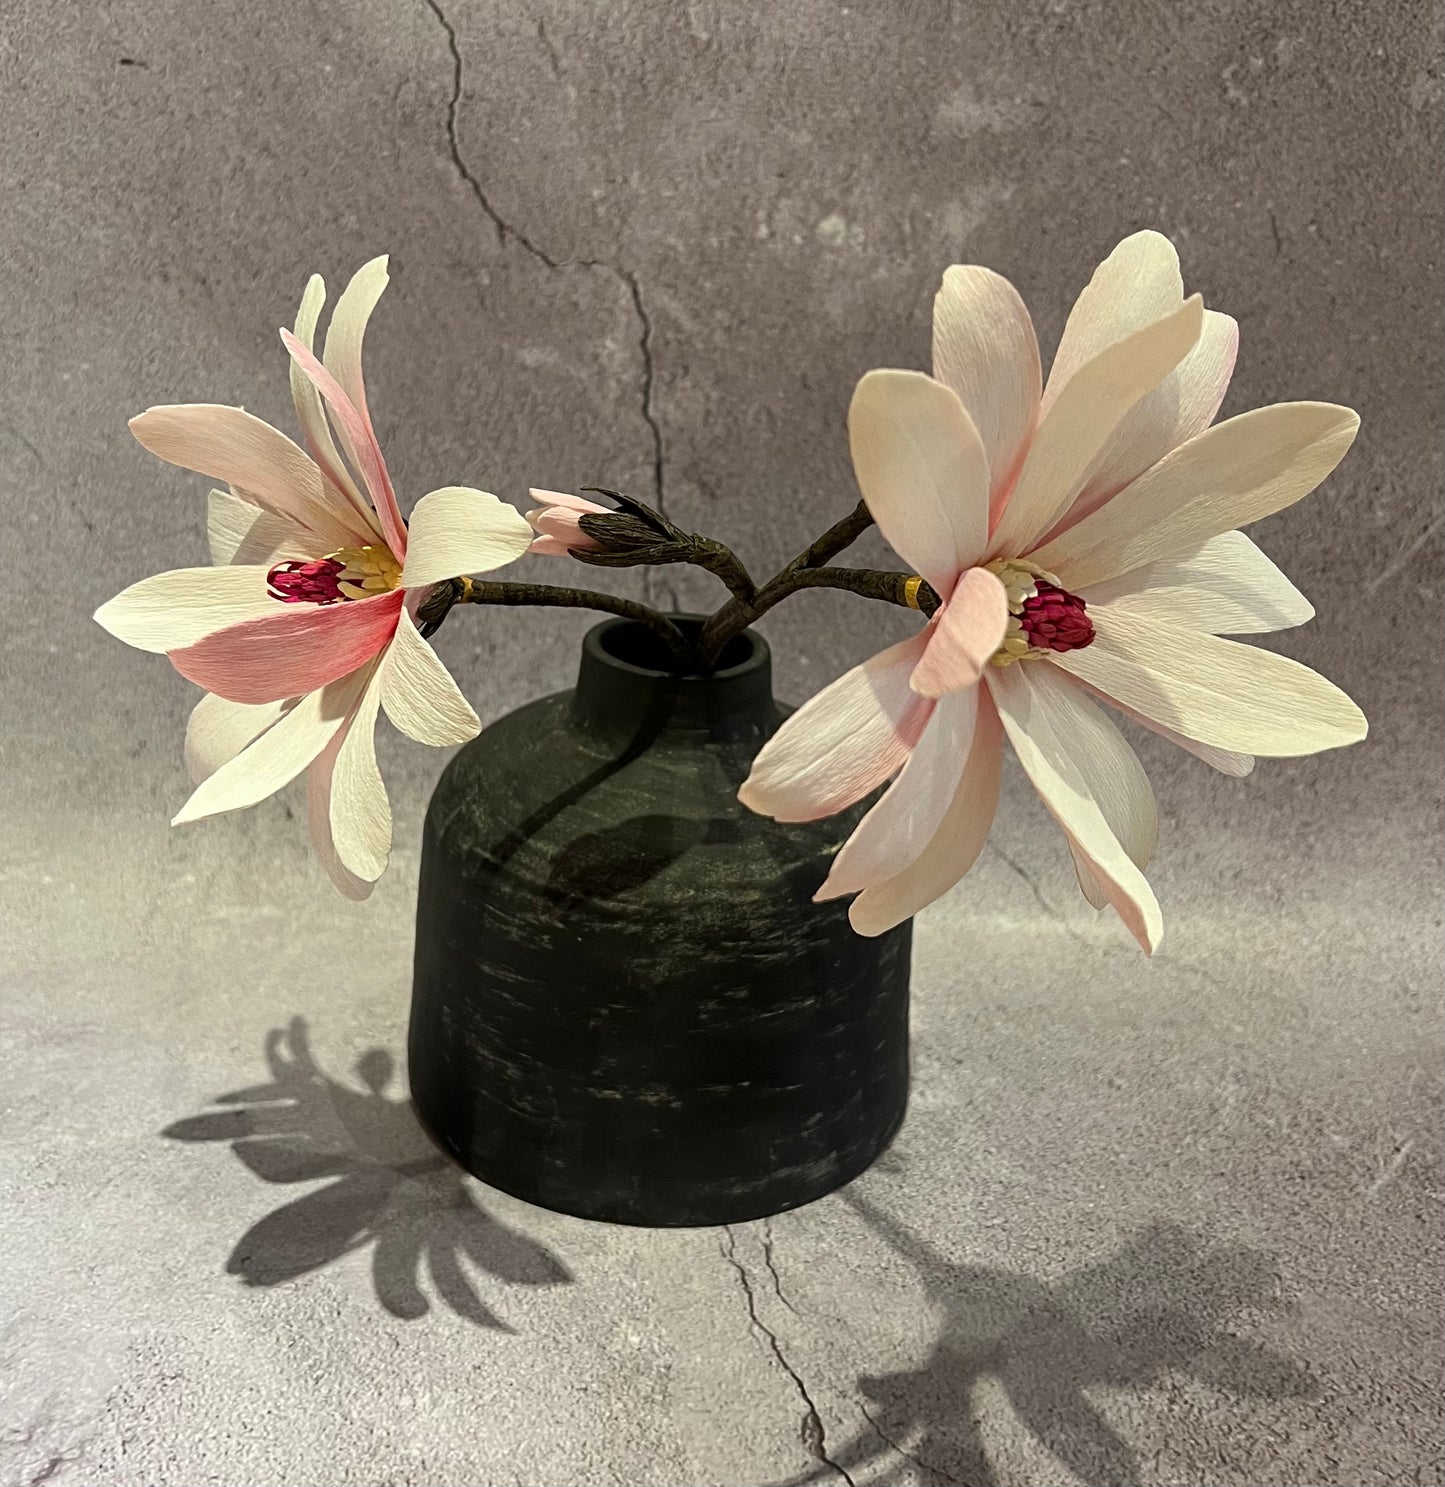 Star Magnolias in vase